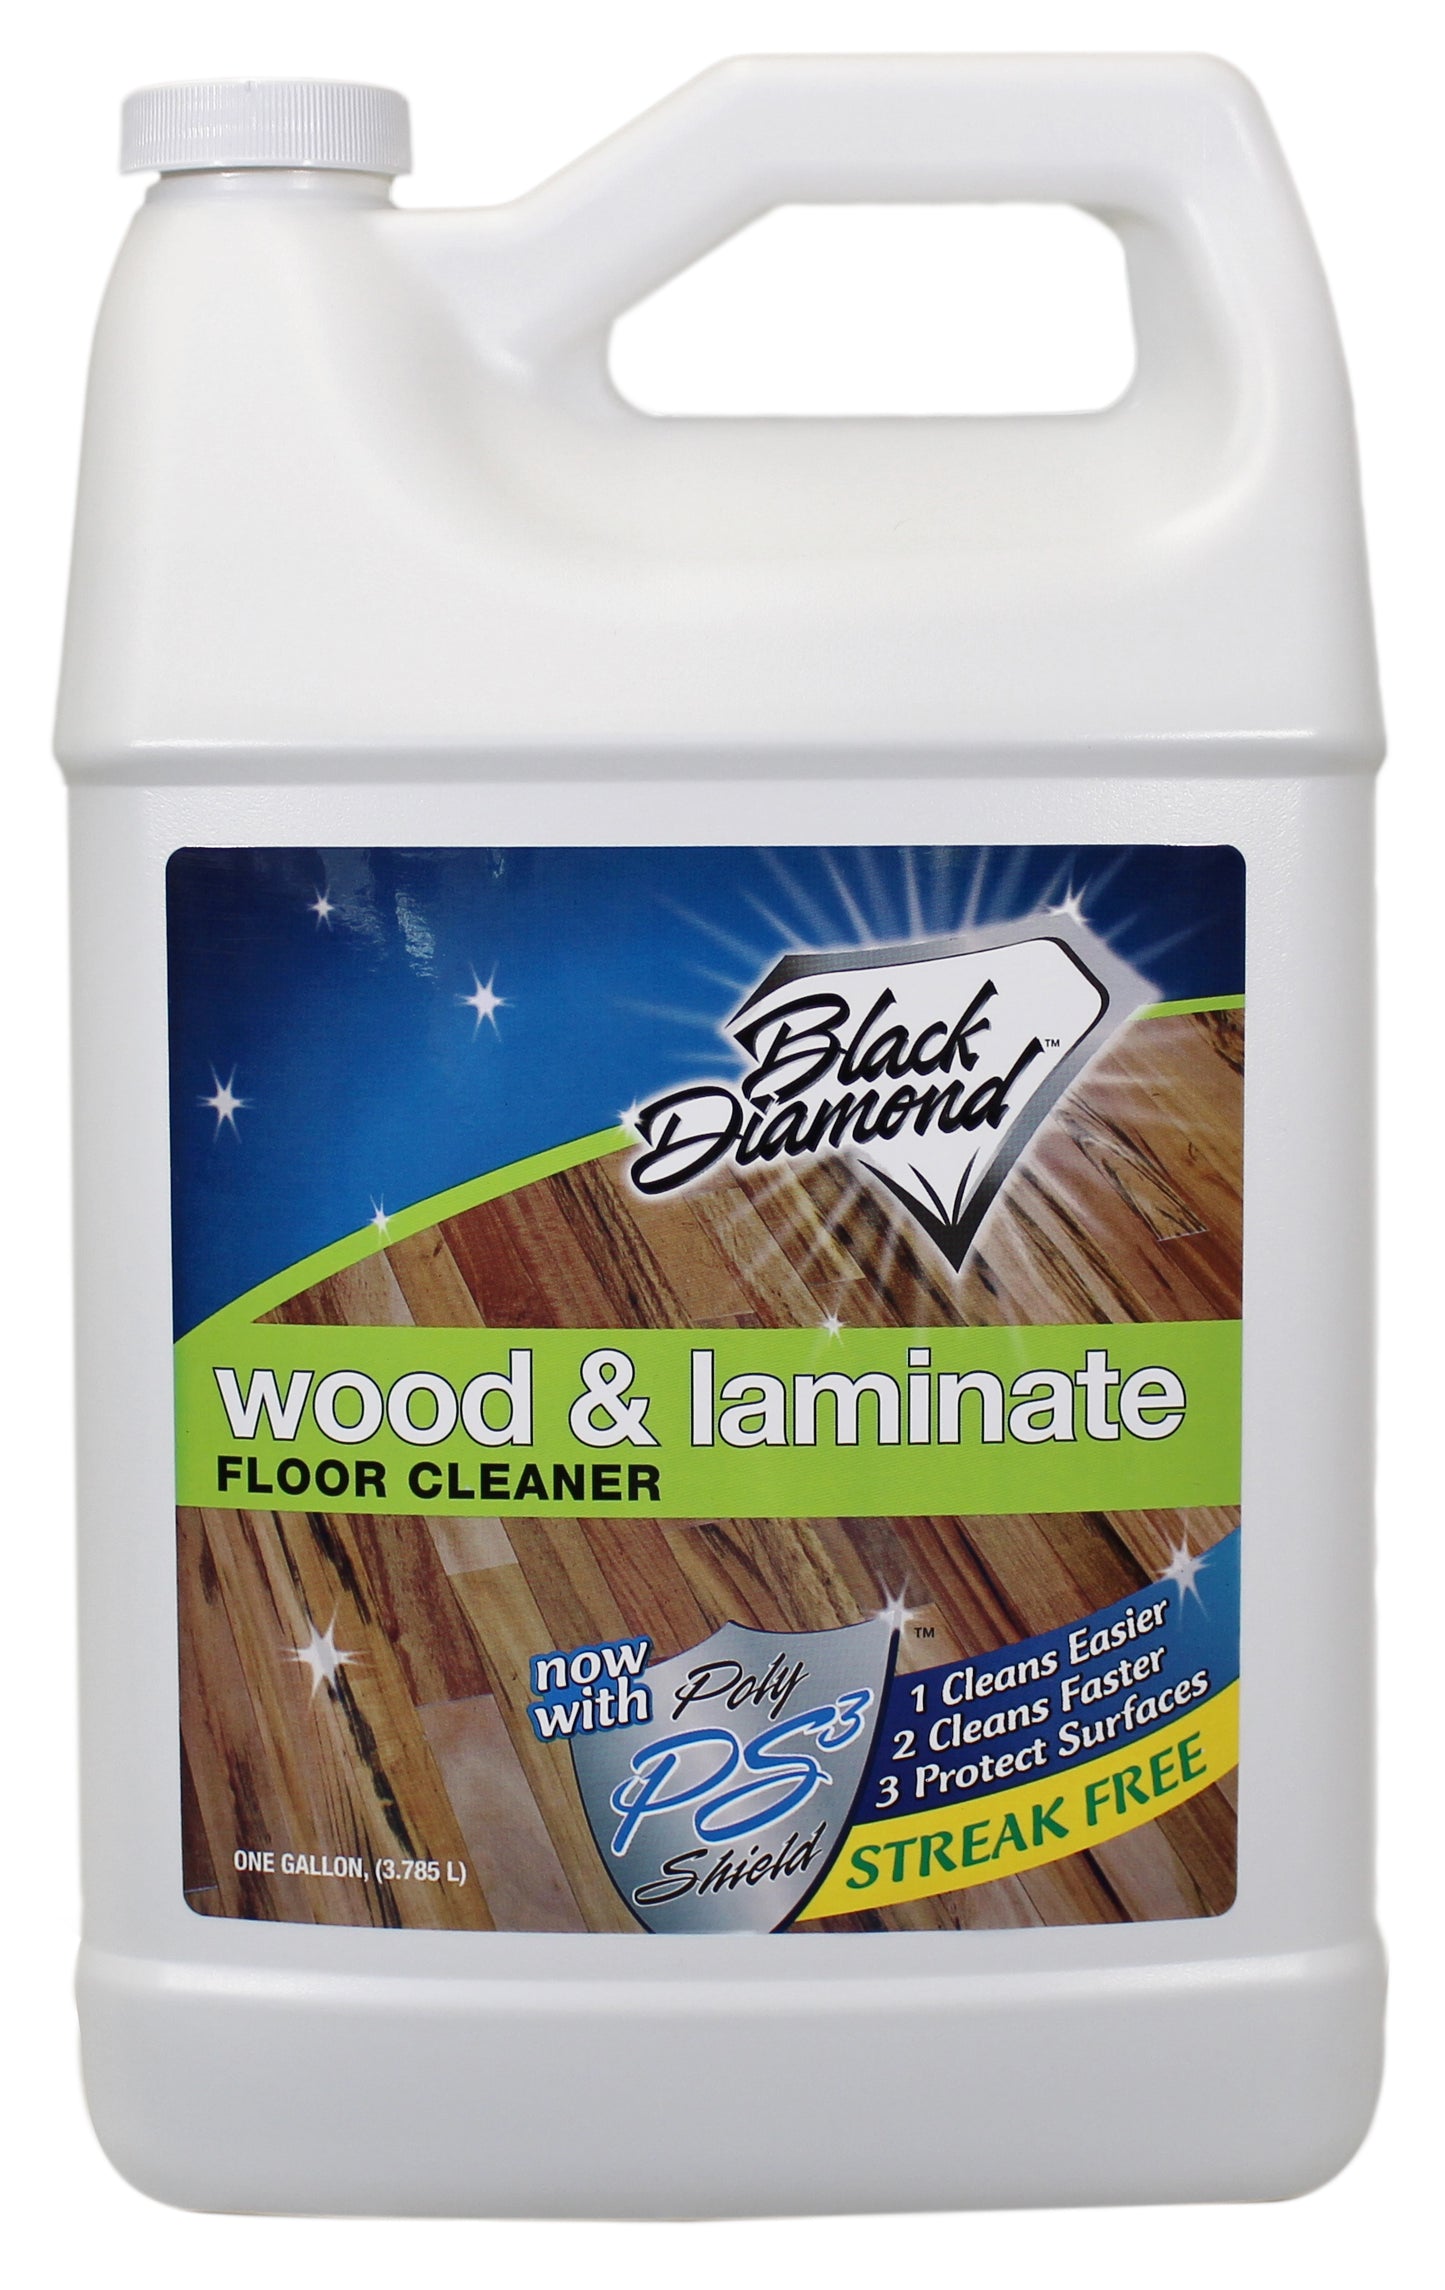 Black Diamond Stoneworks Wood & Laminate Floor Cleaner: For Hardwood, Real, Natural & Engineered Flooring –Biodegradable Safe for Cleaning All Floors